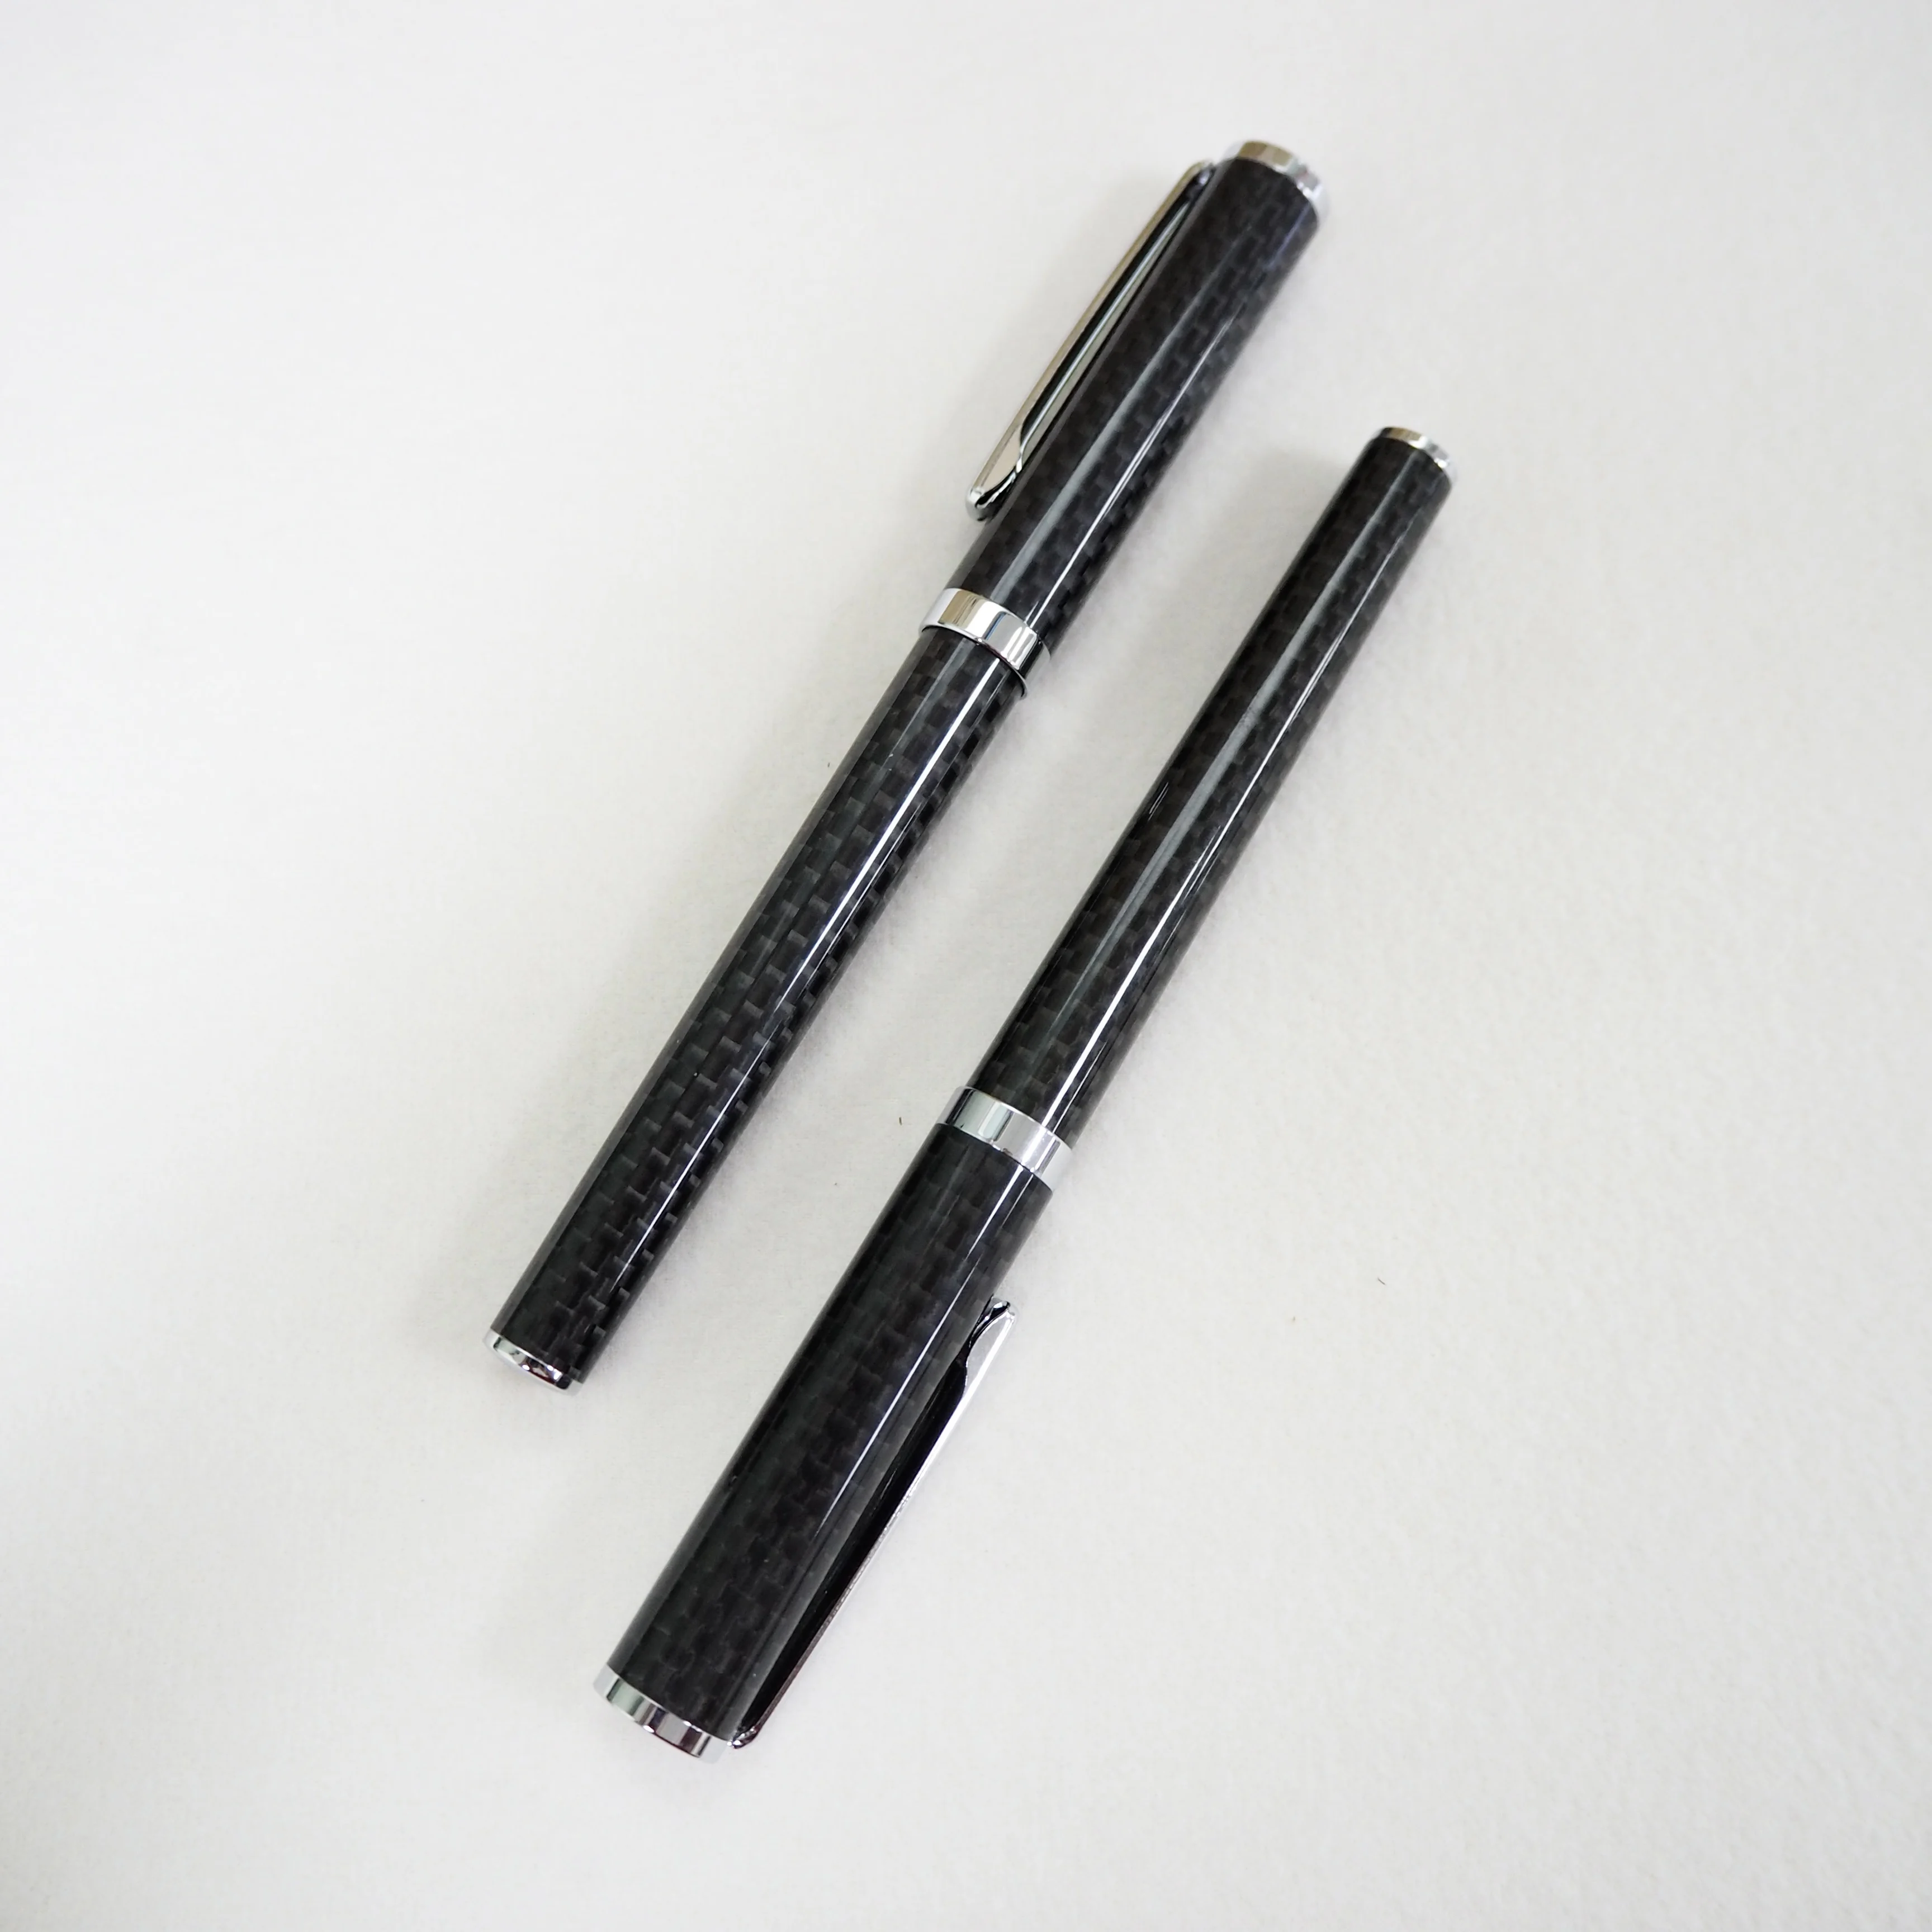 
Luxury Real Carbon fiber Roller ball Pen with Schneider Topball 850 Gel ink refill 